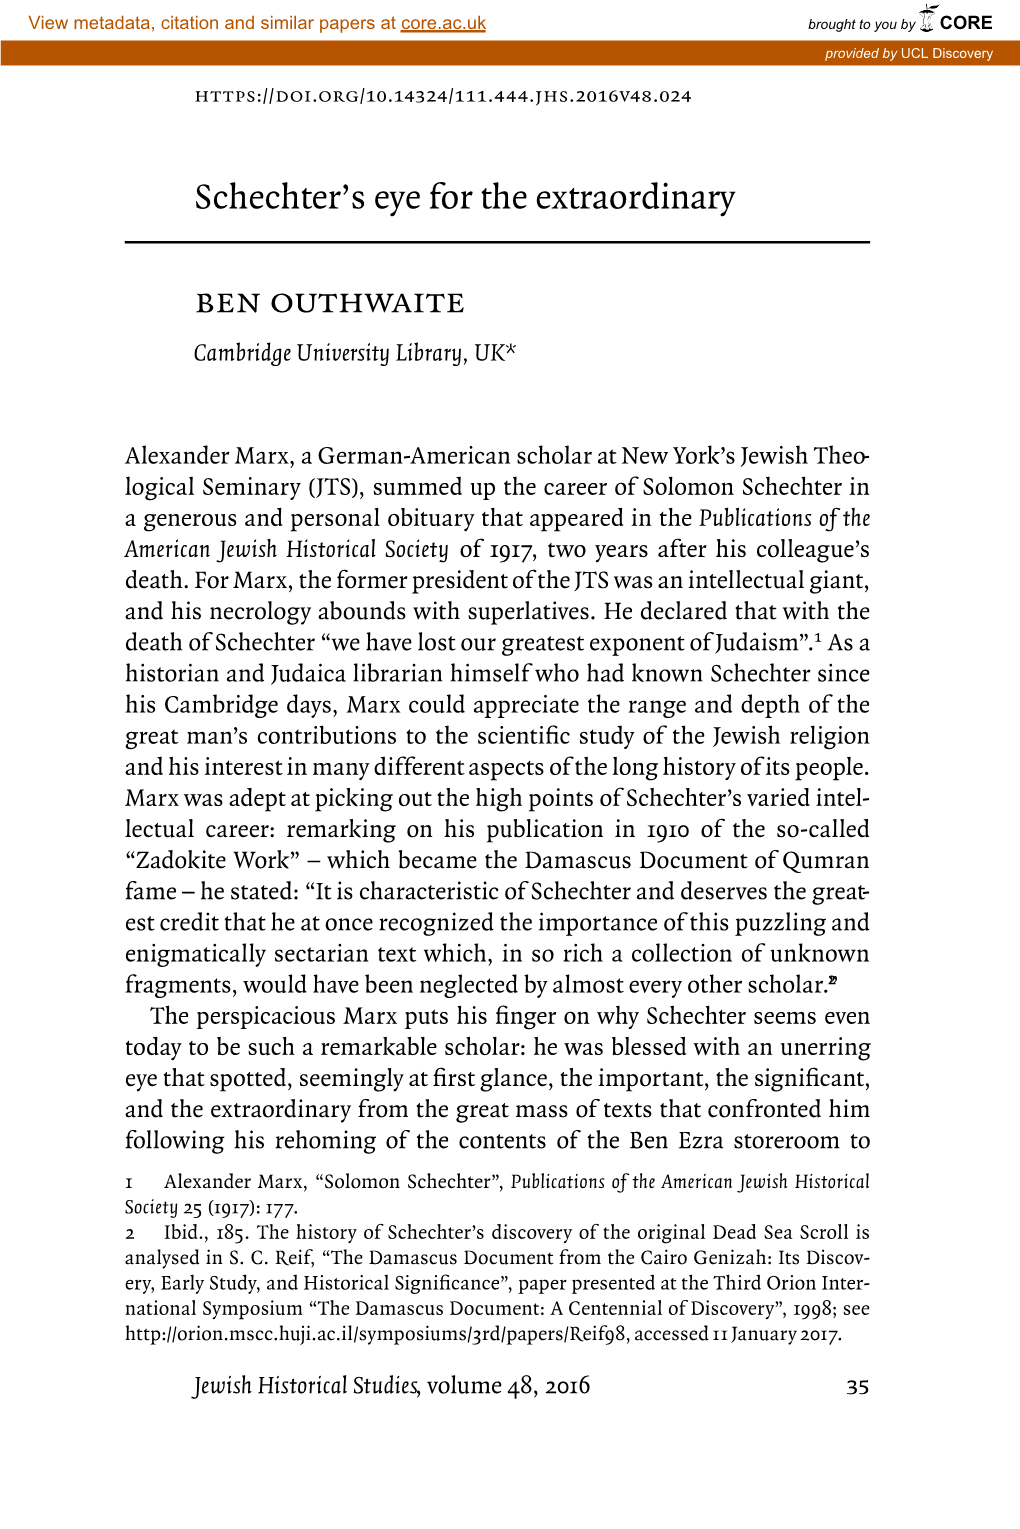 Schechter's Eye for the Extraordinary Ben Outhwaite